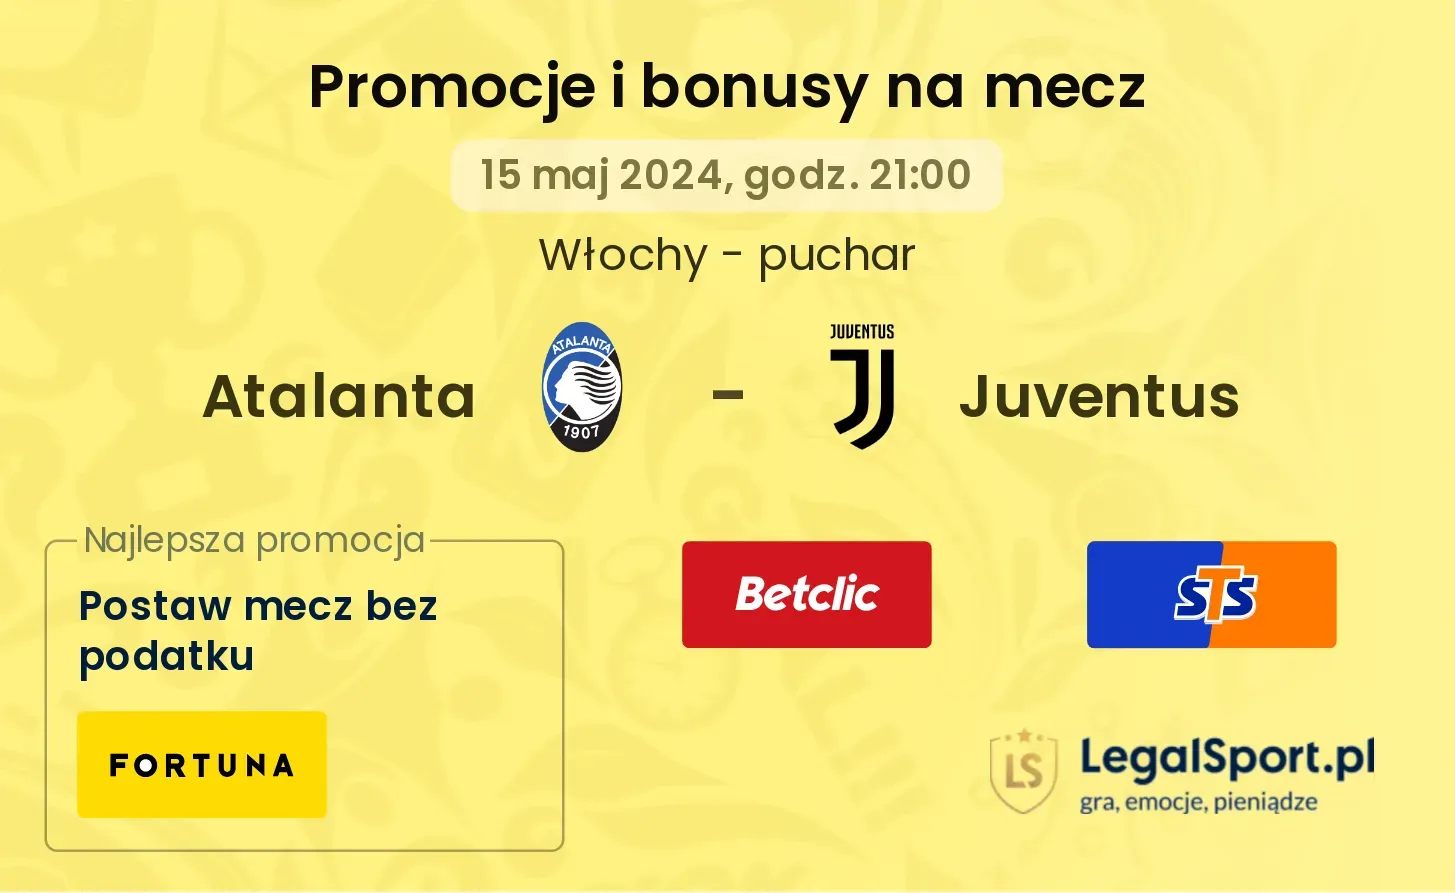 Atalanta - Juventus promocje i bonusy (15.05, 21:00)